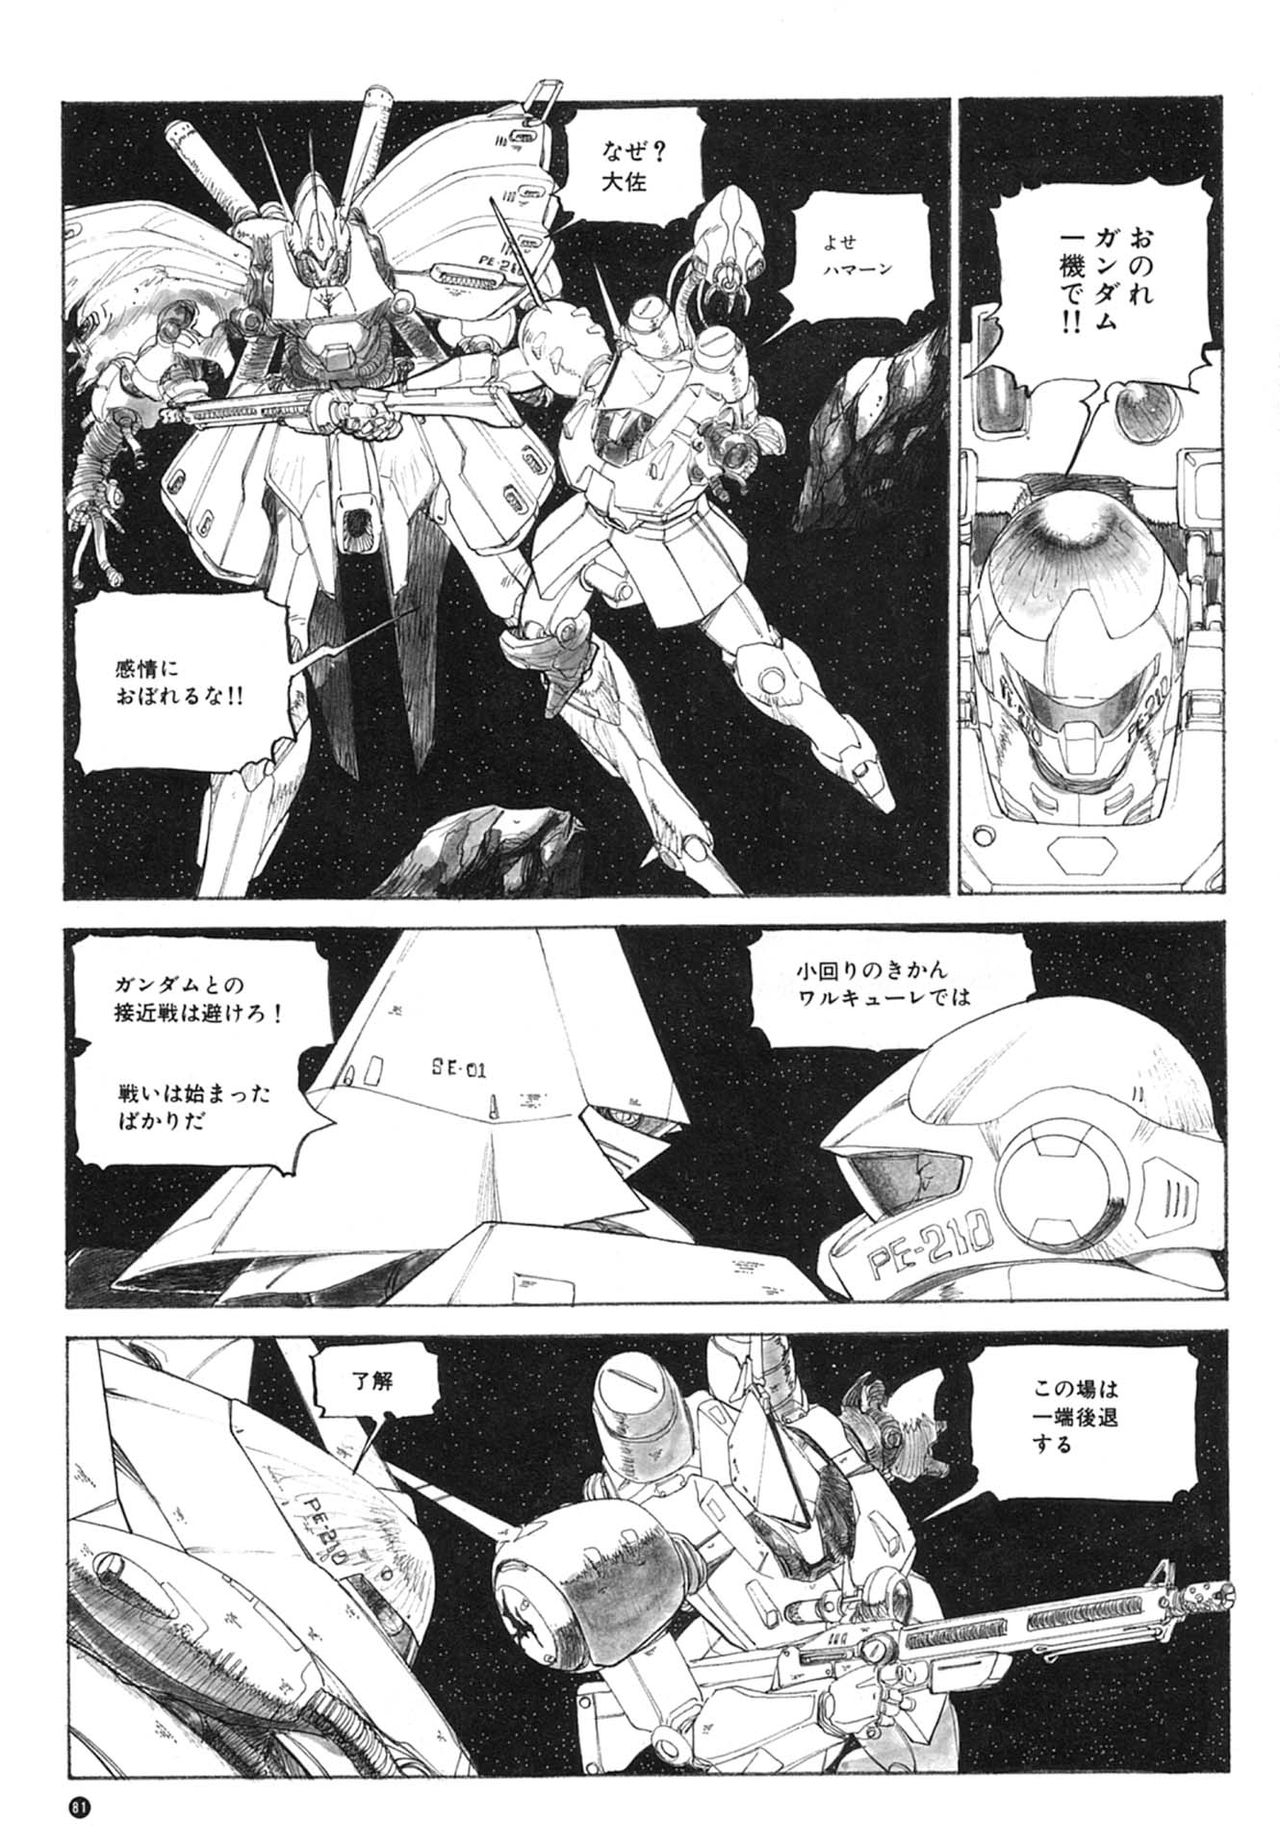 [Kazuhisa Kondo] Kazuhisa Kondo 2D & 3D Works - Go Ahead - From Mobile Suit Gundam to Original Mechanism 80